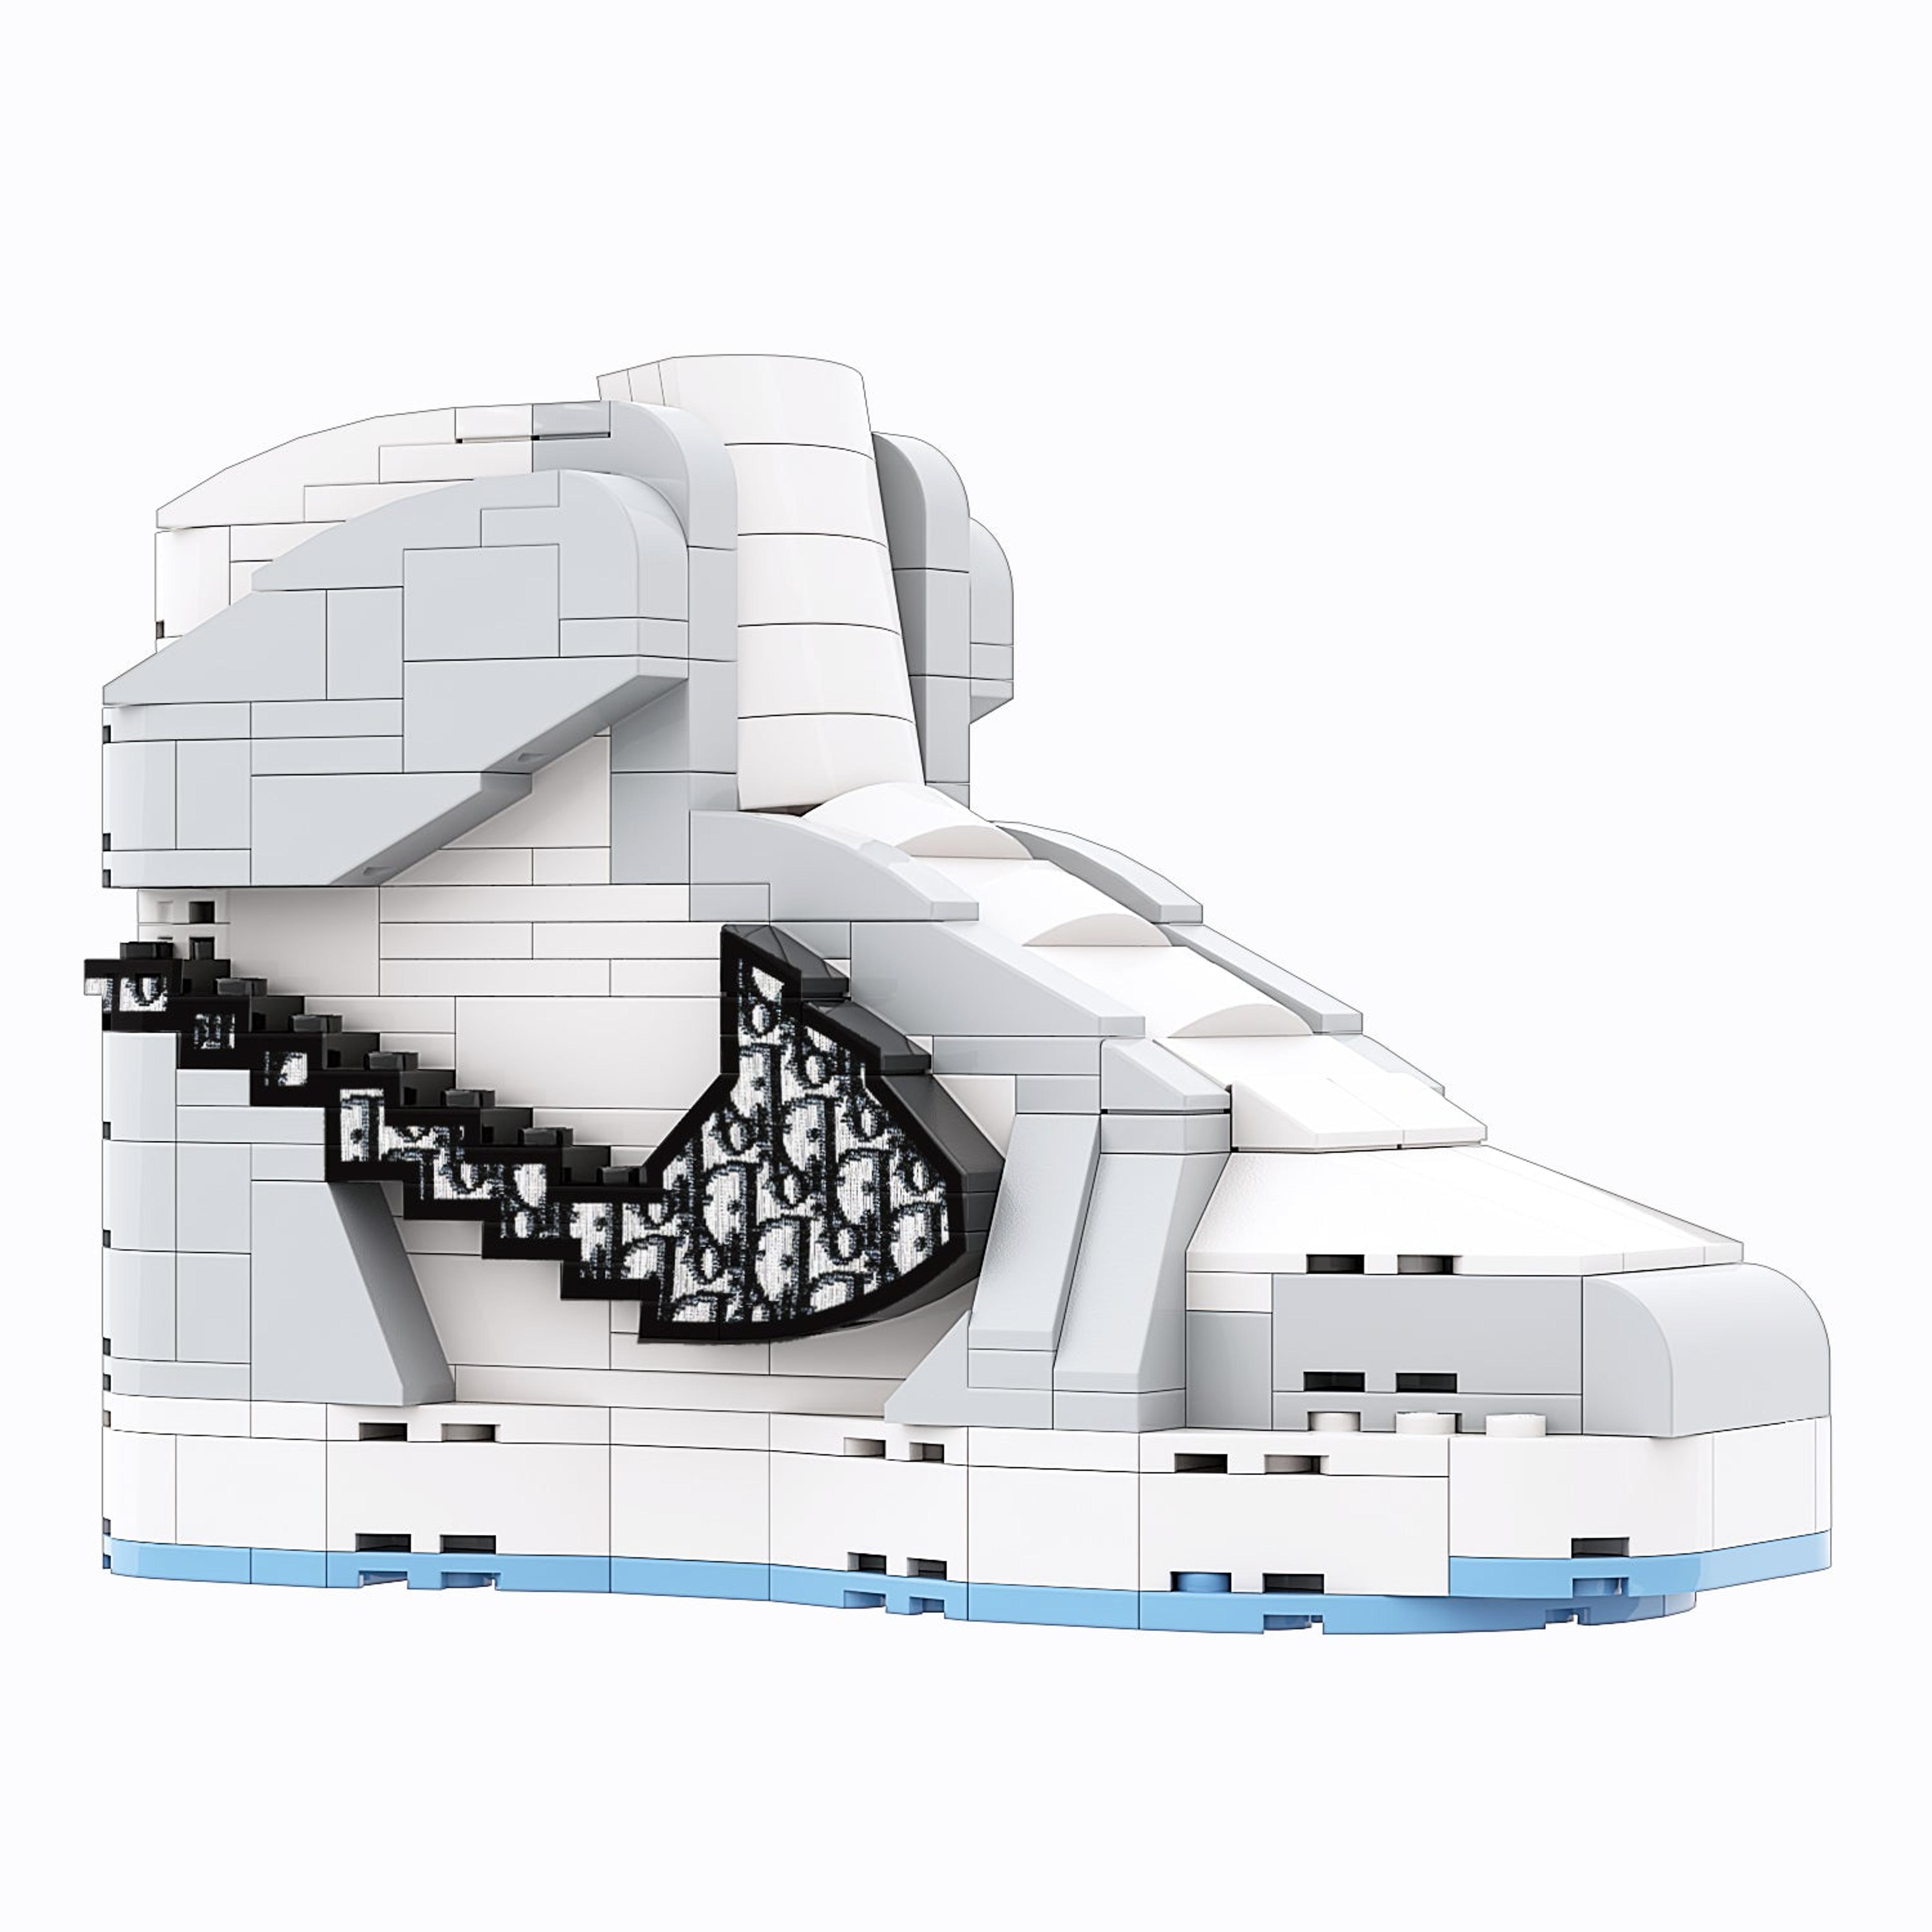 Alternate View 5 of REGULAR "AJ1 Dior High" Sneaker Bricks with Mini Figure